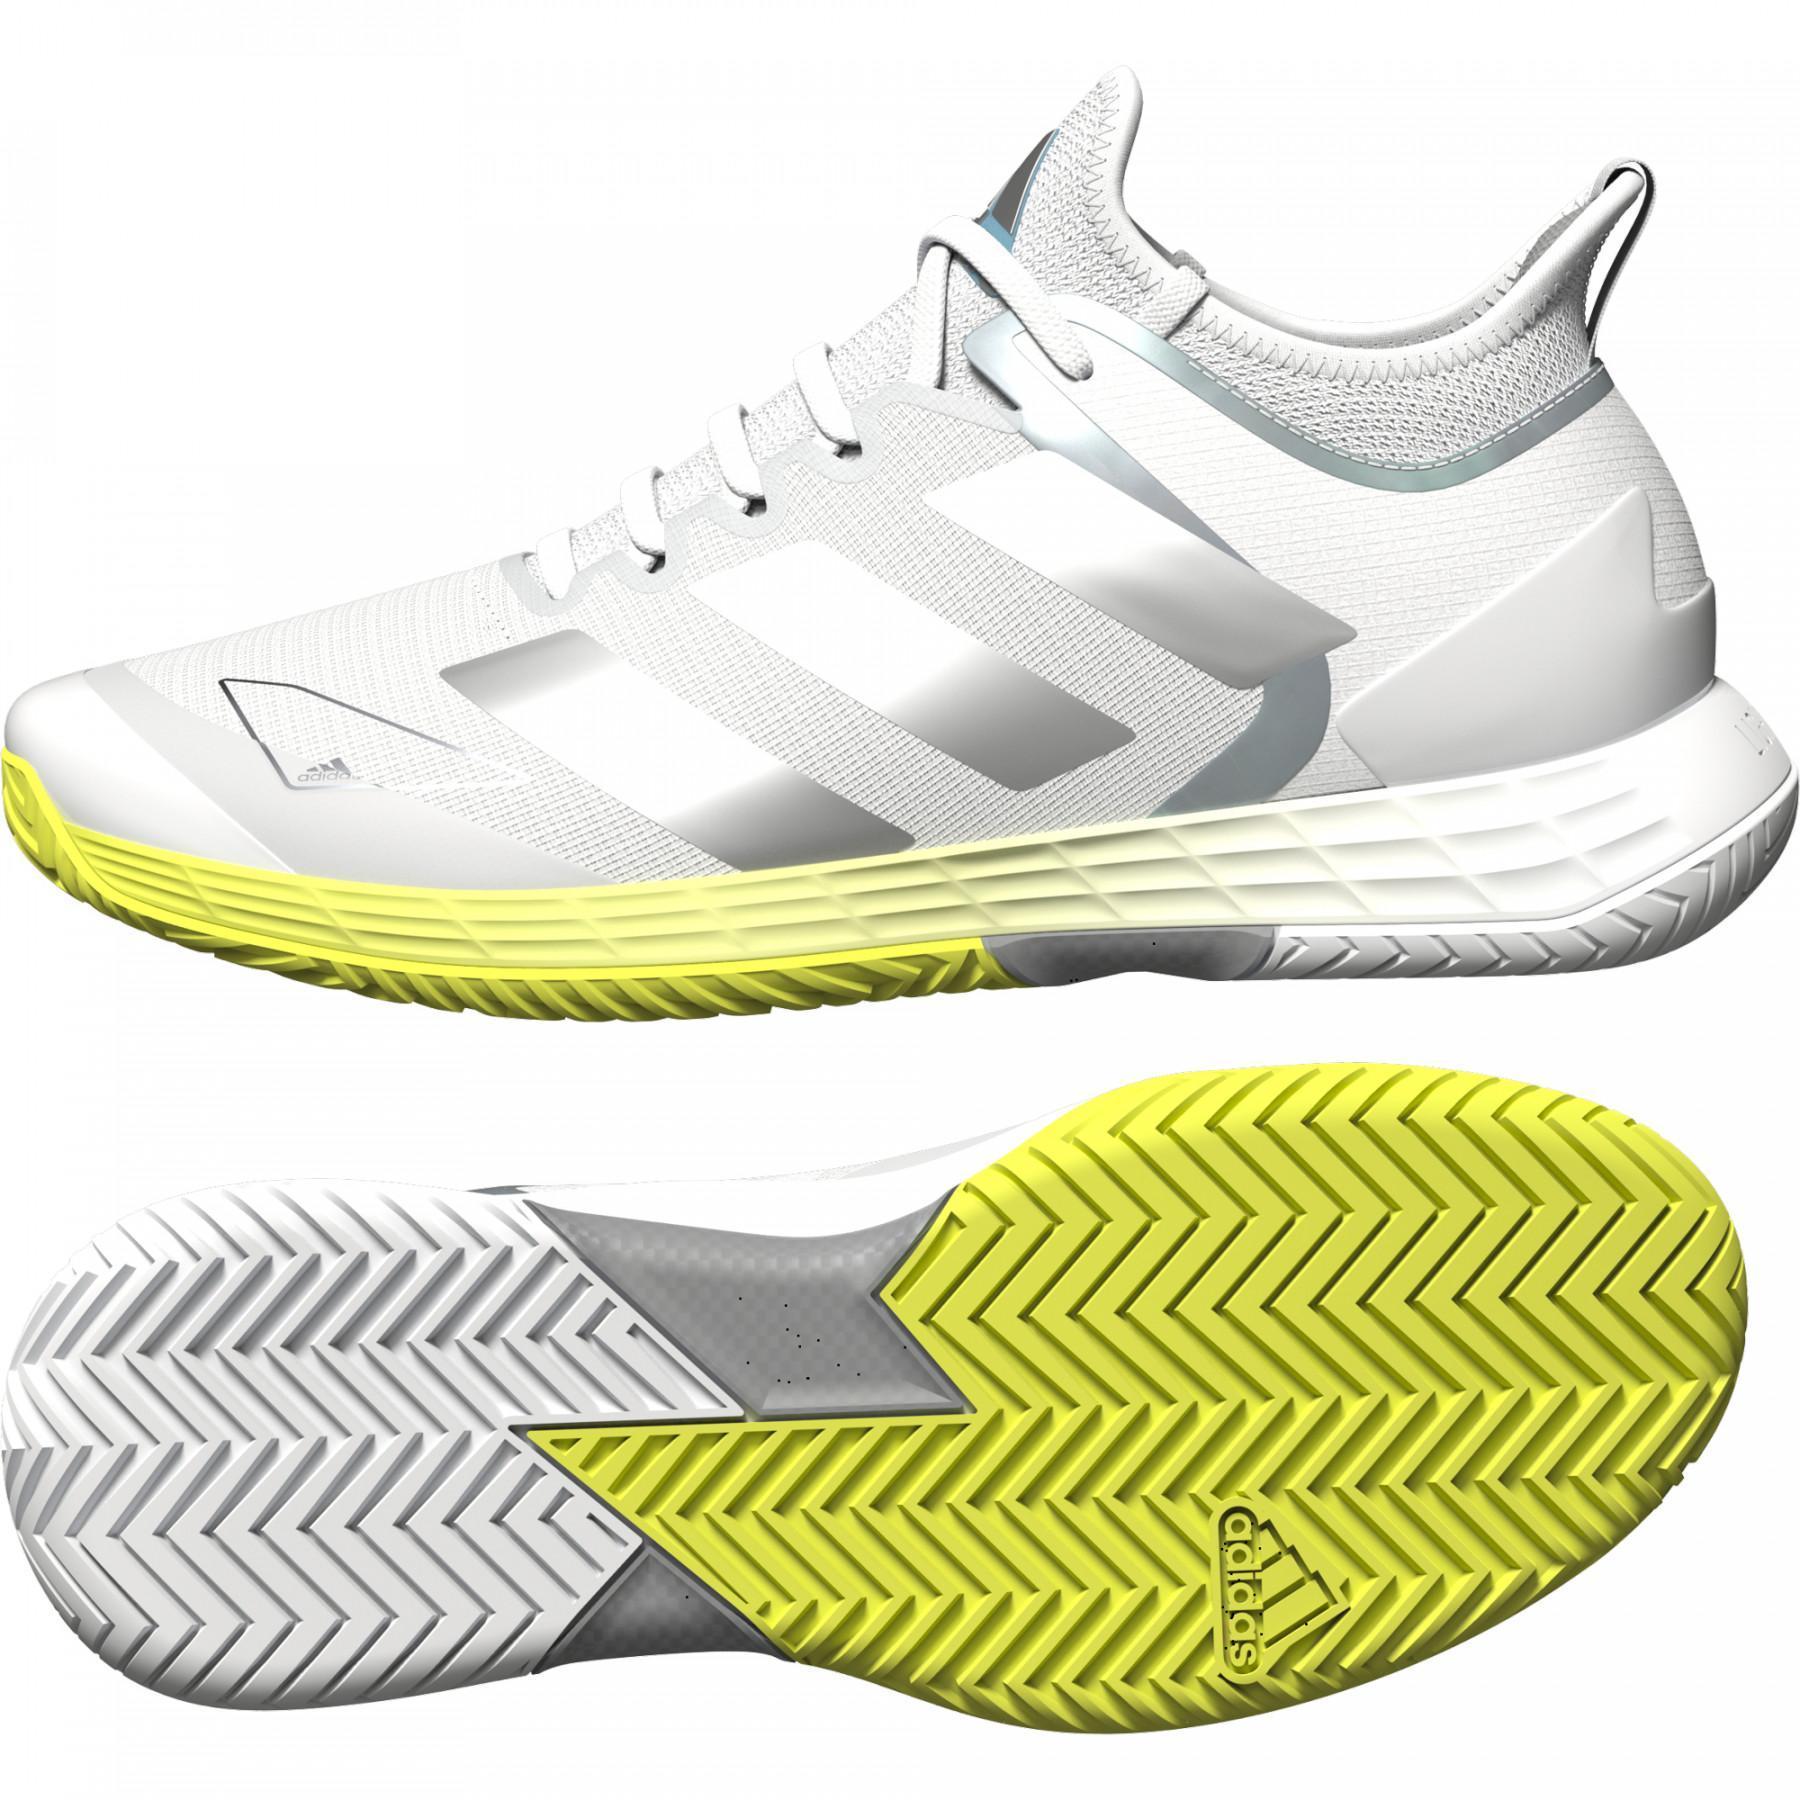 Chaussures femme adidas Adizero Ubersonic 4 Tennis